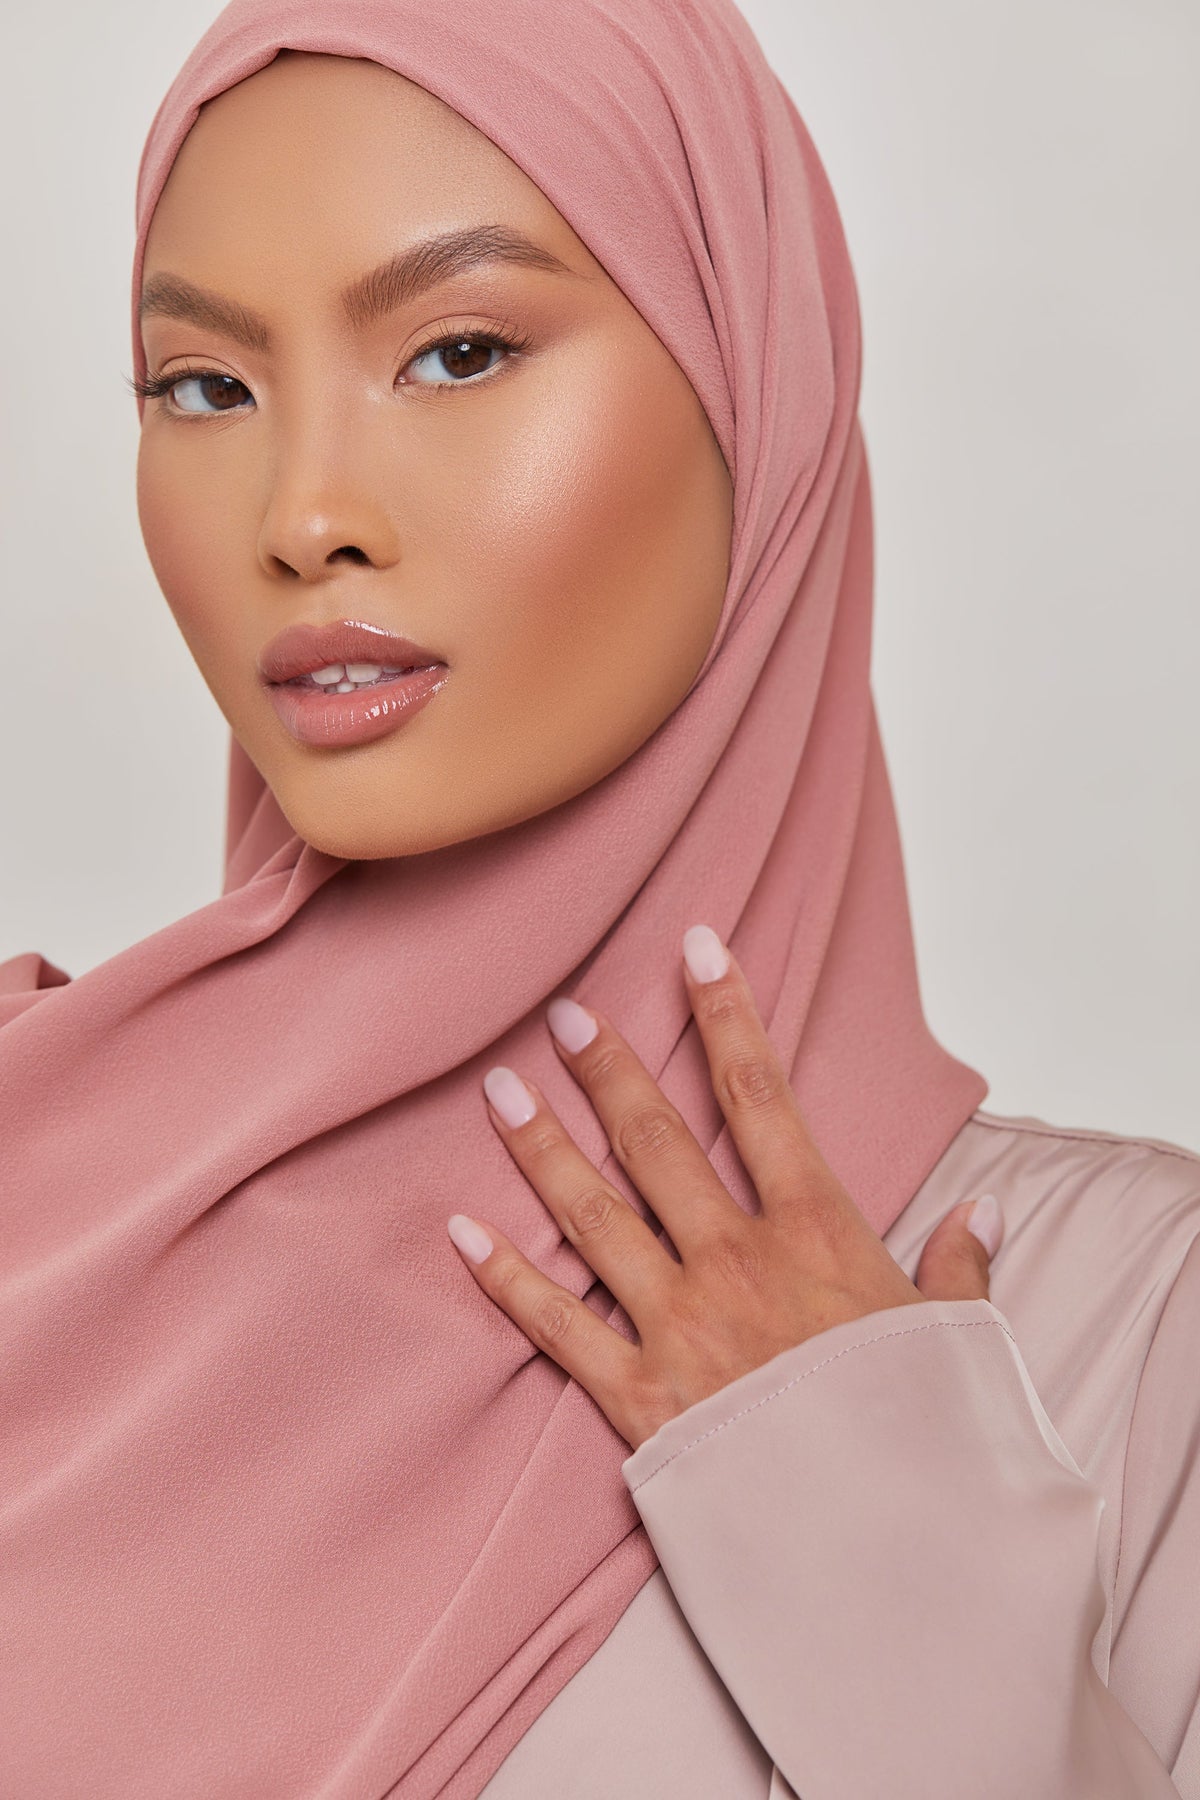 TEXTURE Everyday Chiffon Hijab - Send Me Roses epschoolboard 